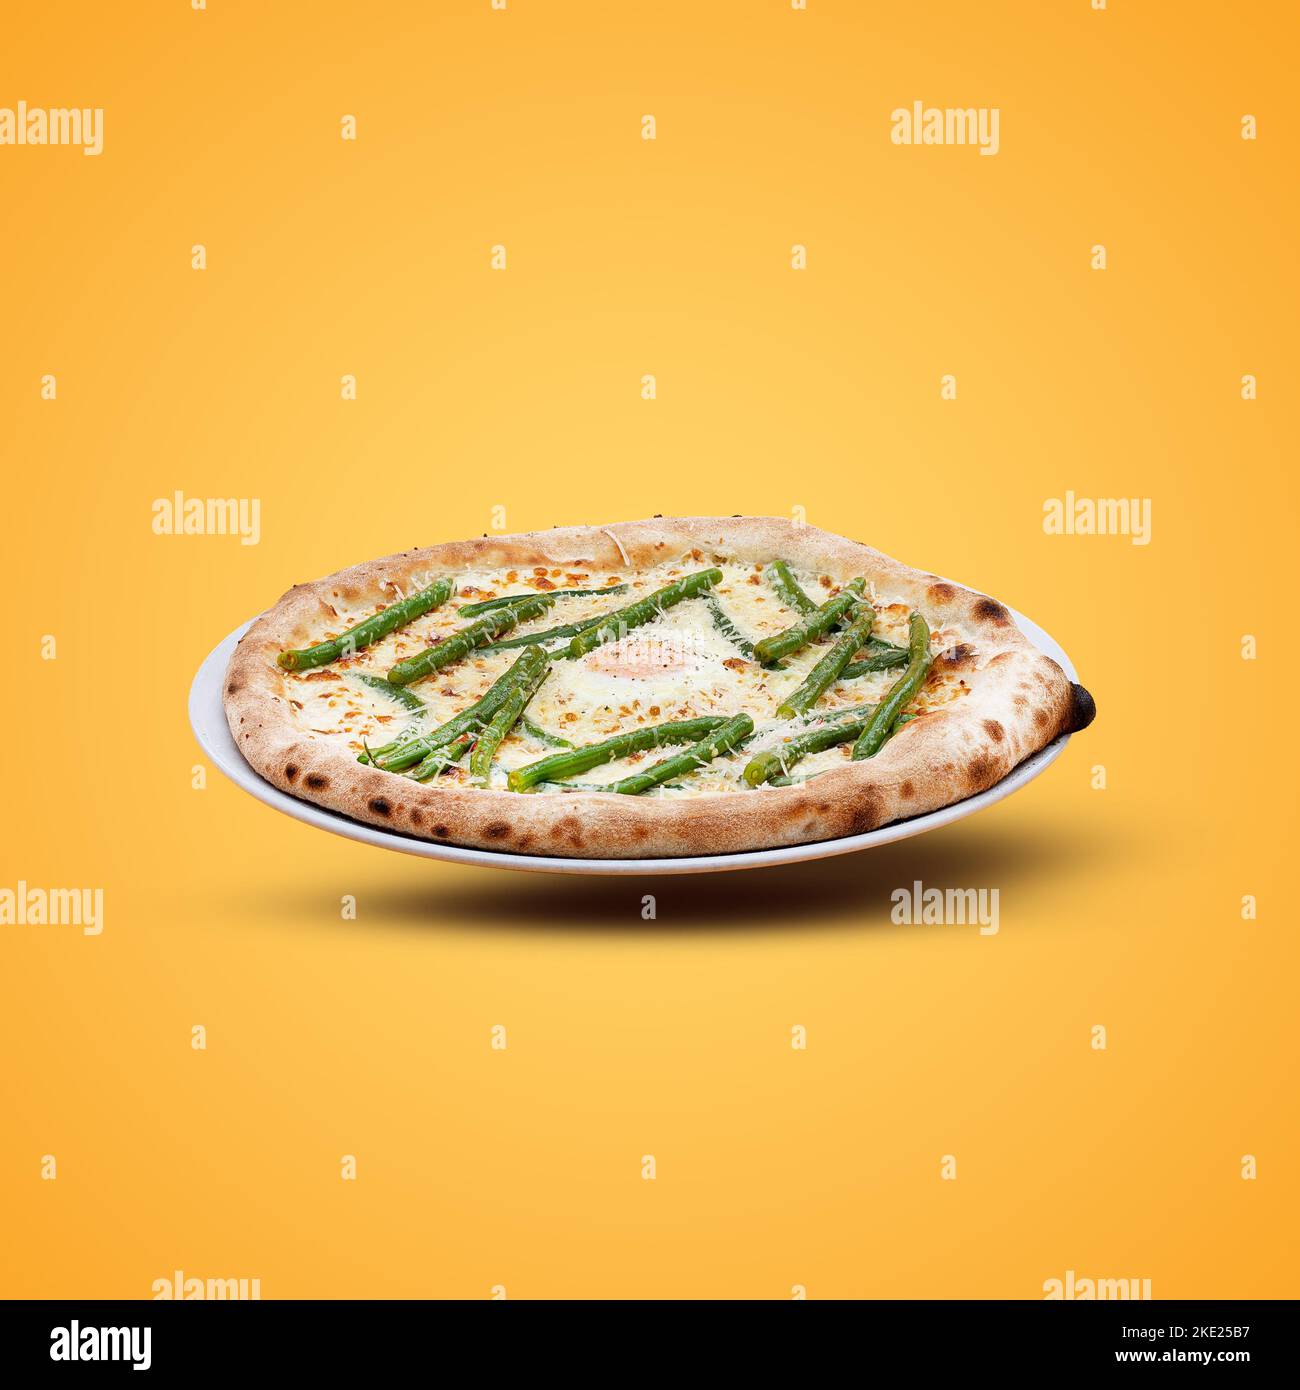 Homemade Italian pizza on a yellow background. Stock Photo